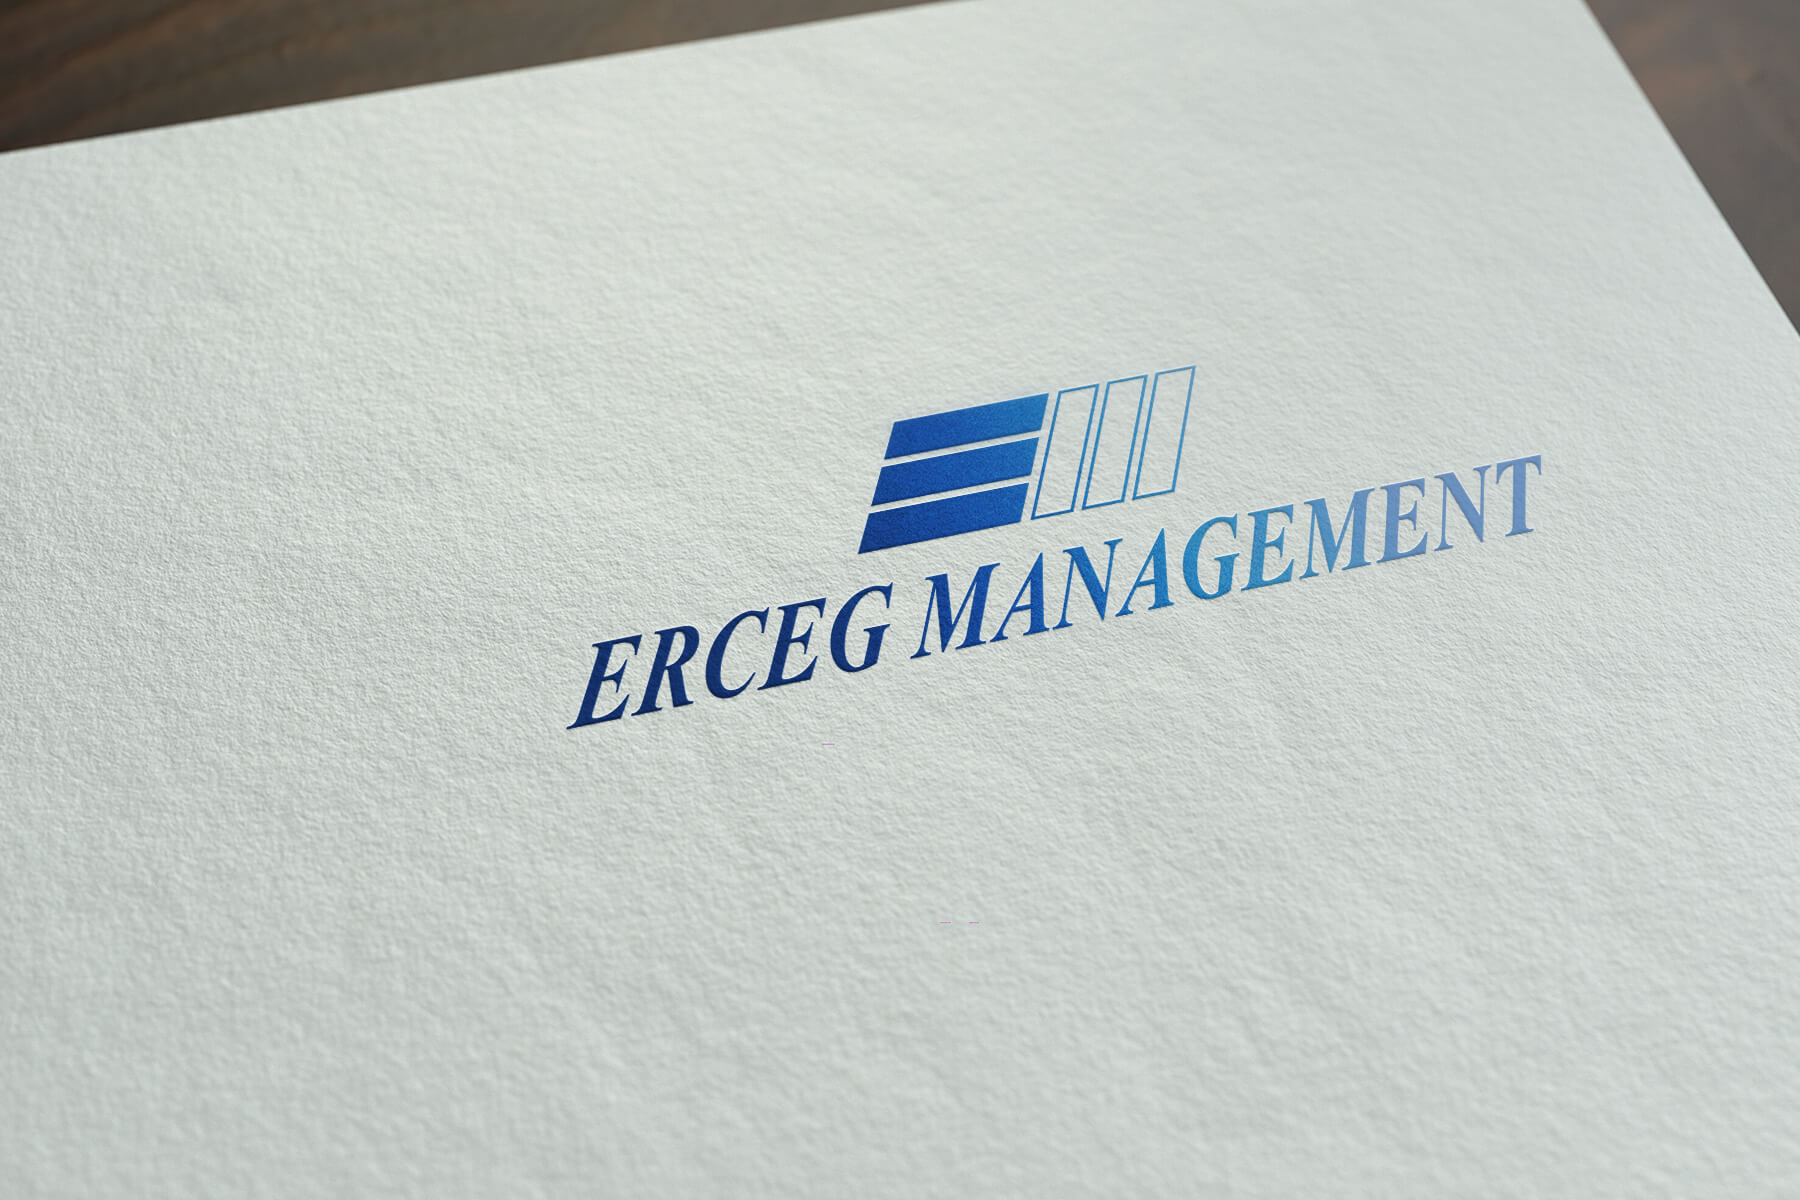 ERCEG Management - Designs by CR8VE designs Perth